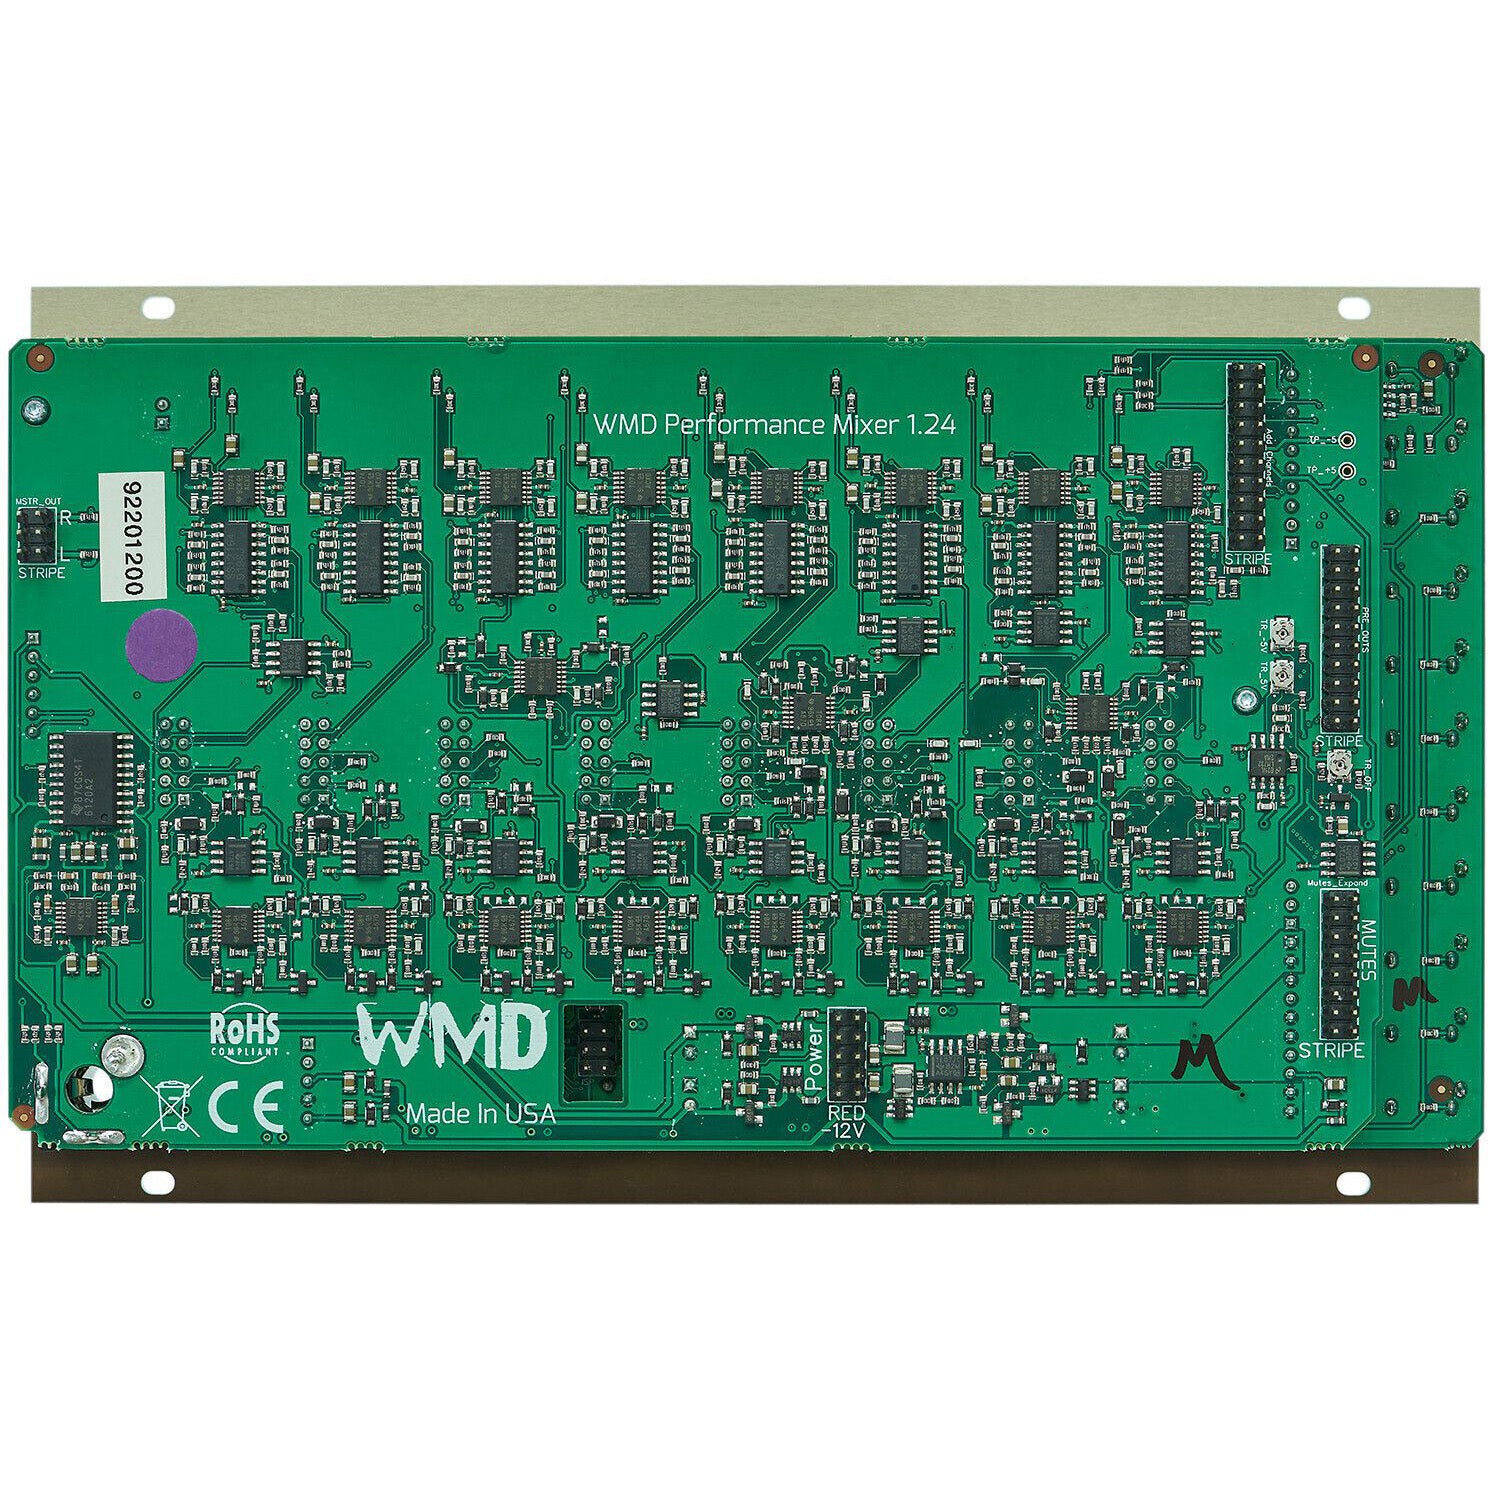 WMD Performance Mixer